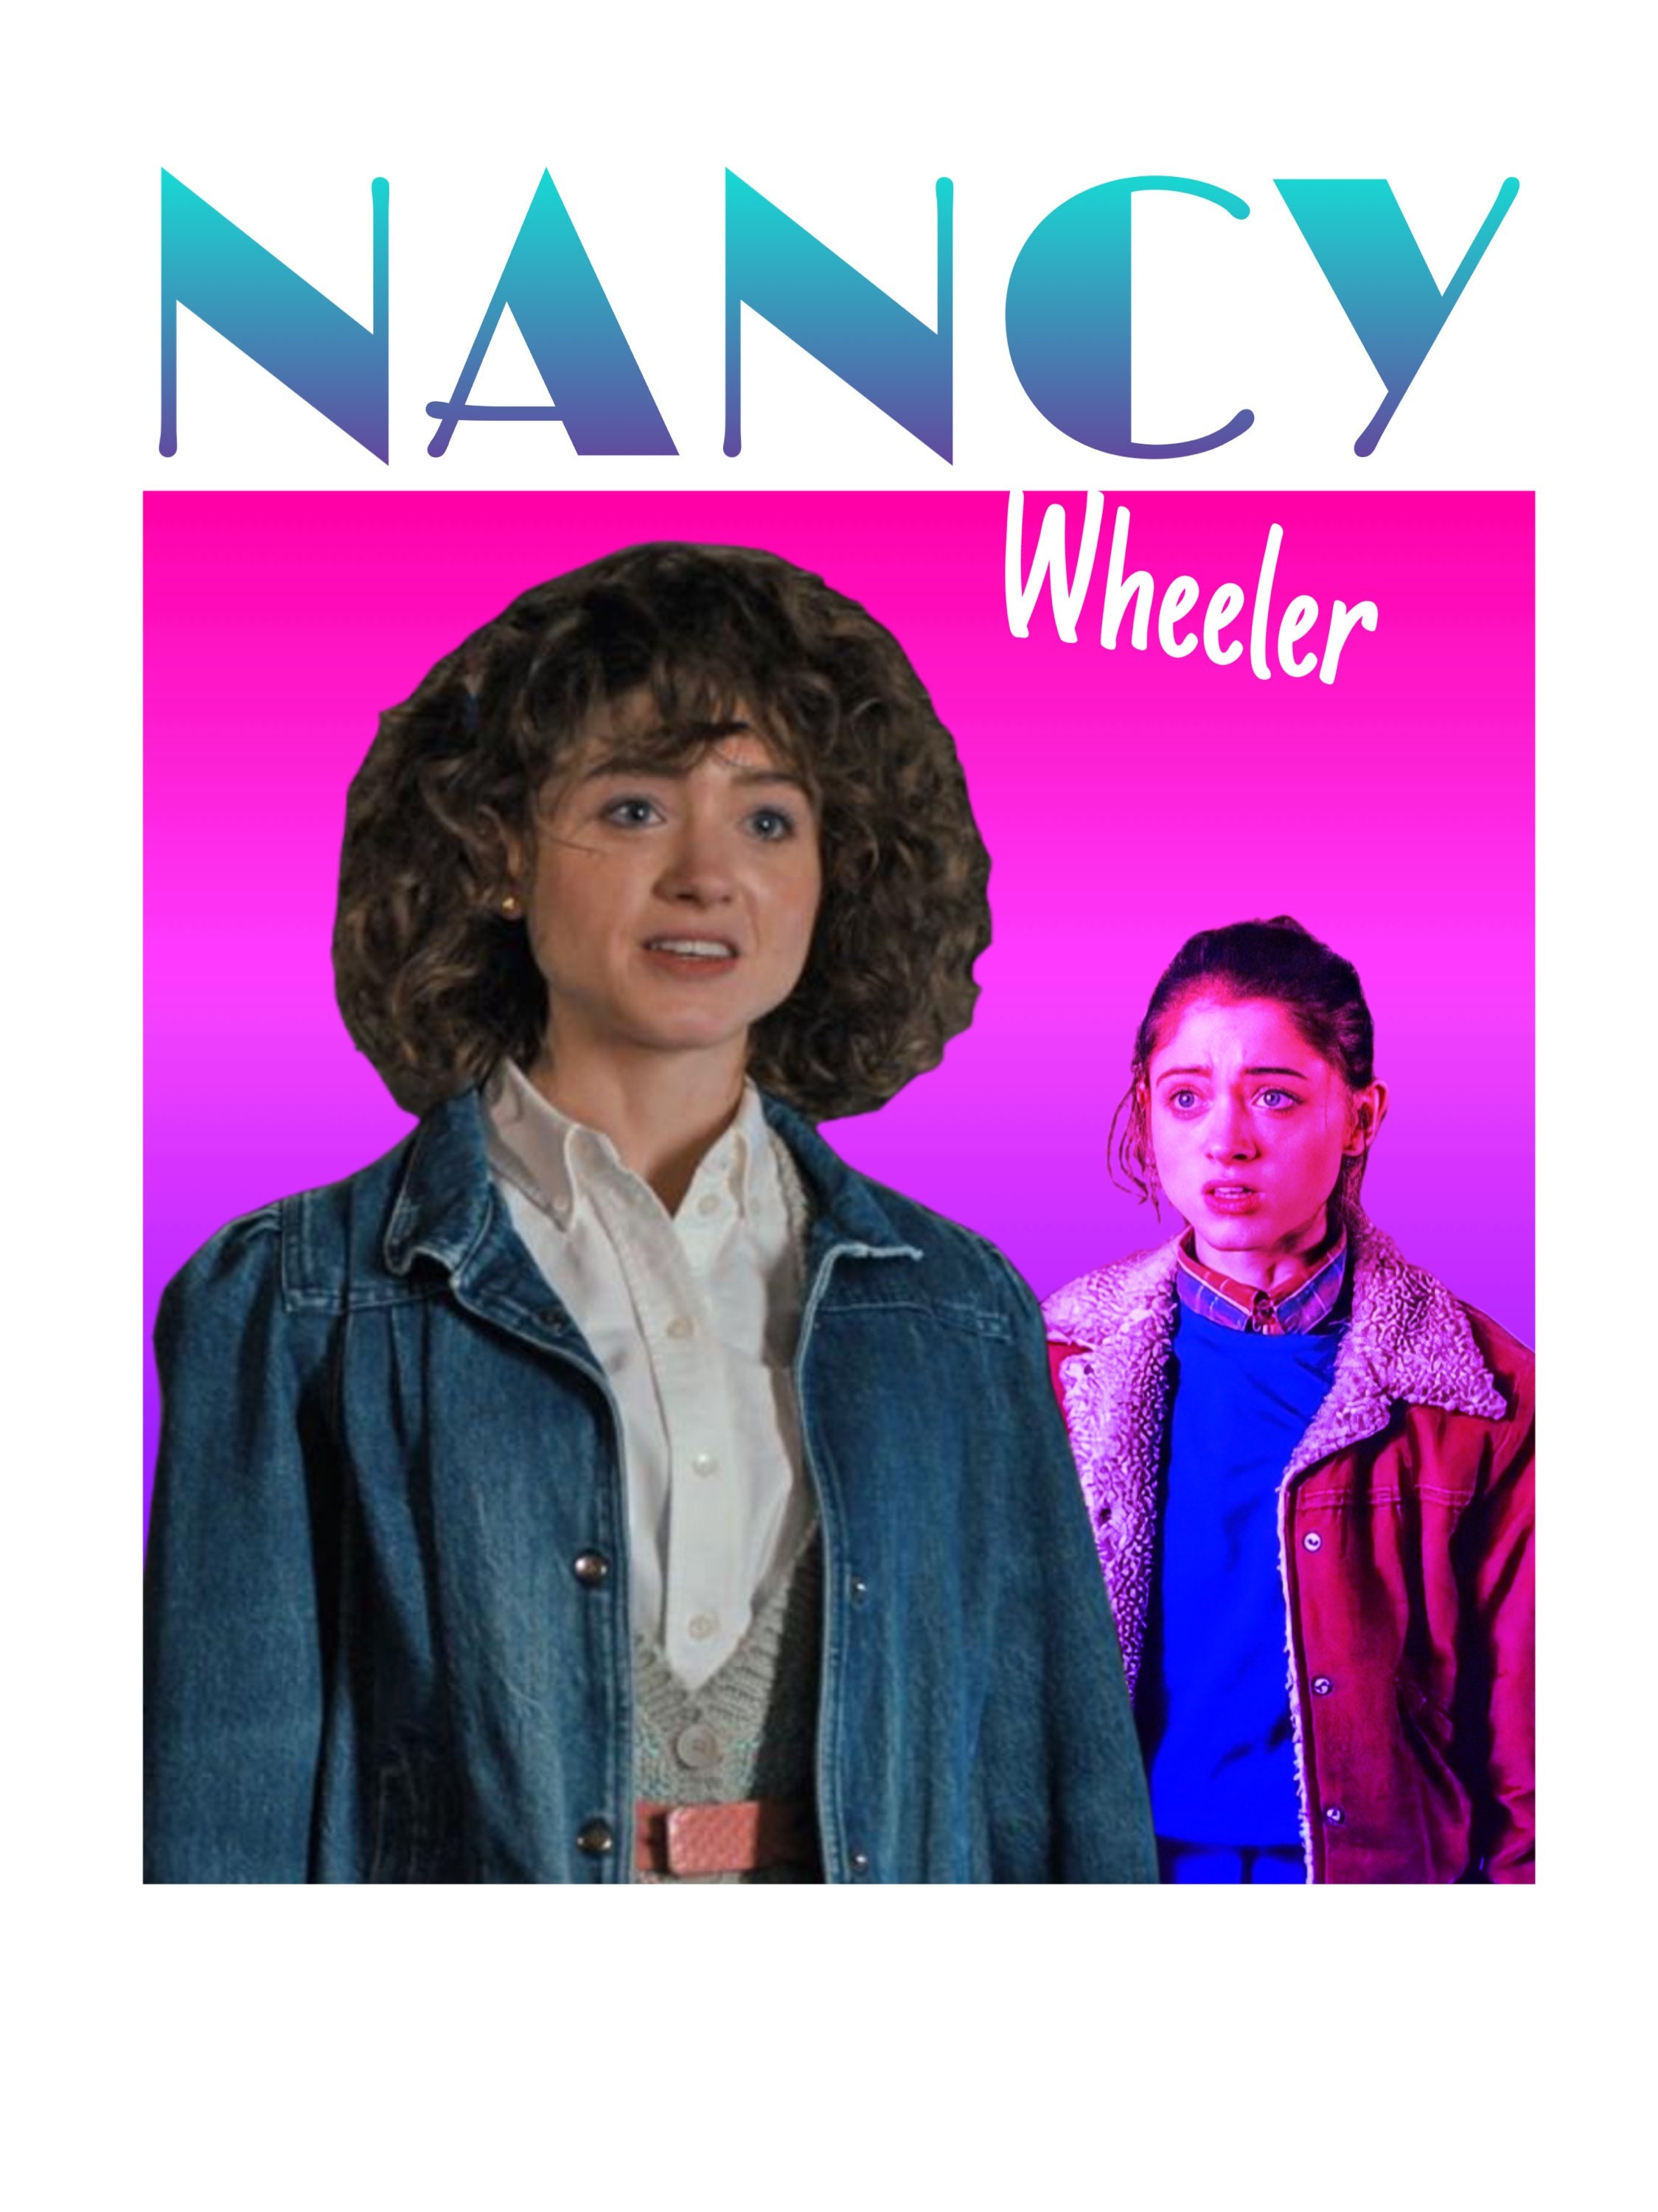 Retro Natalia Dyer (Nancy Wheeler) Shirt